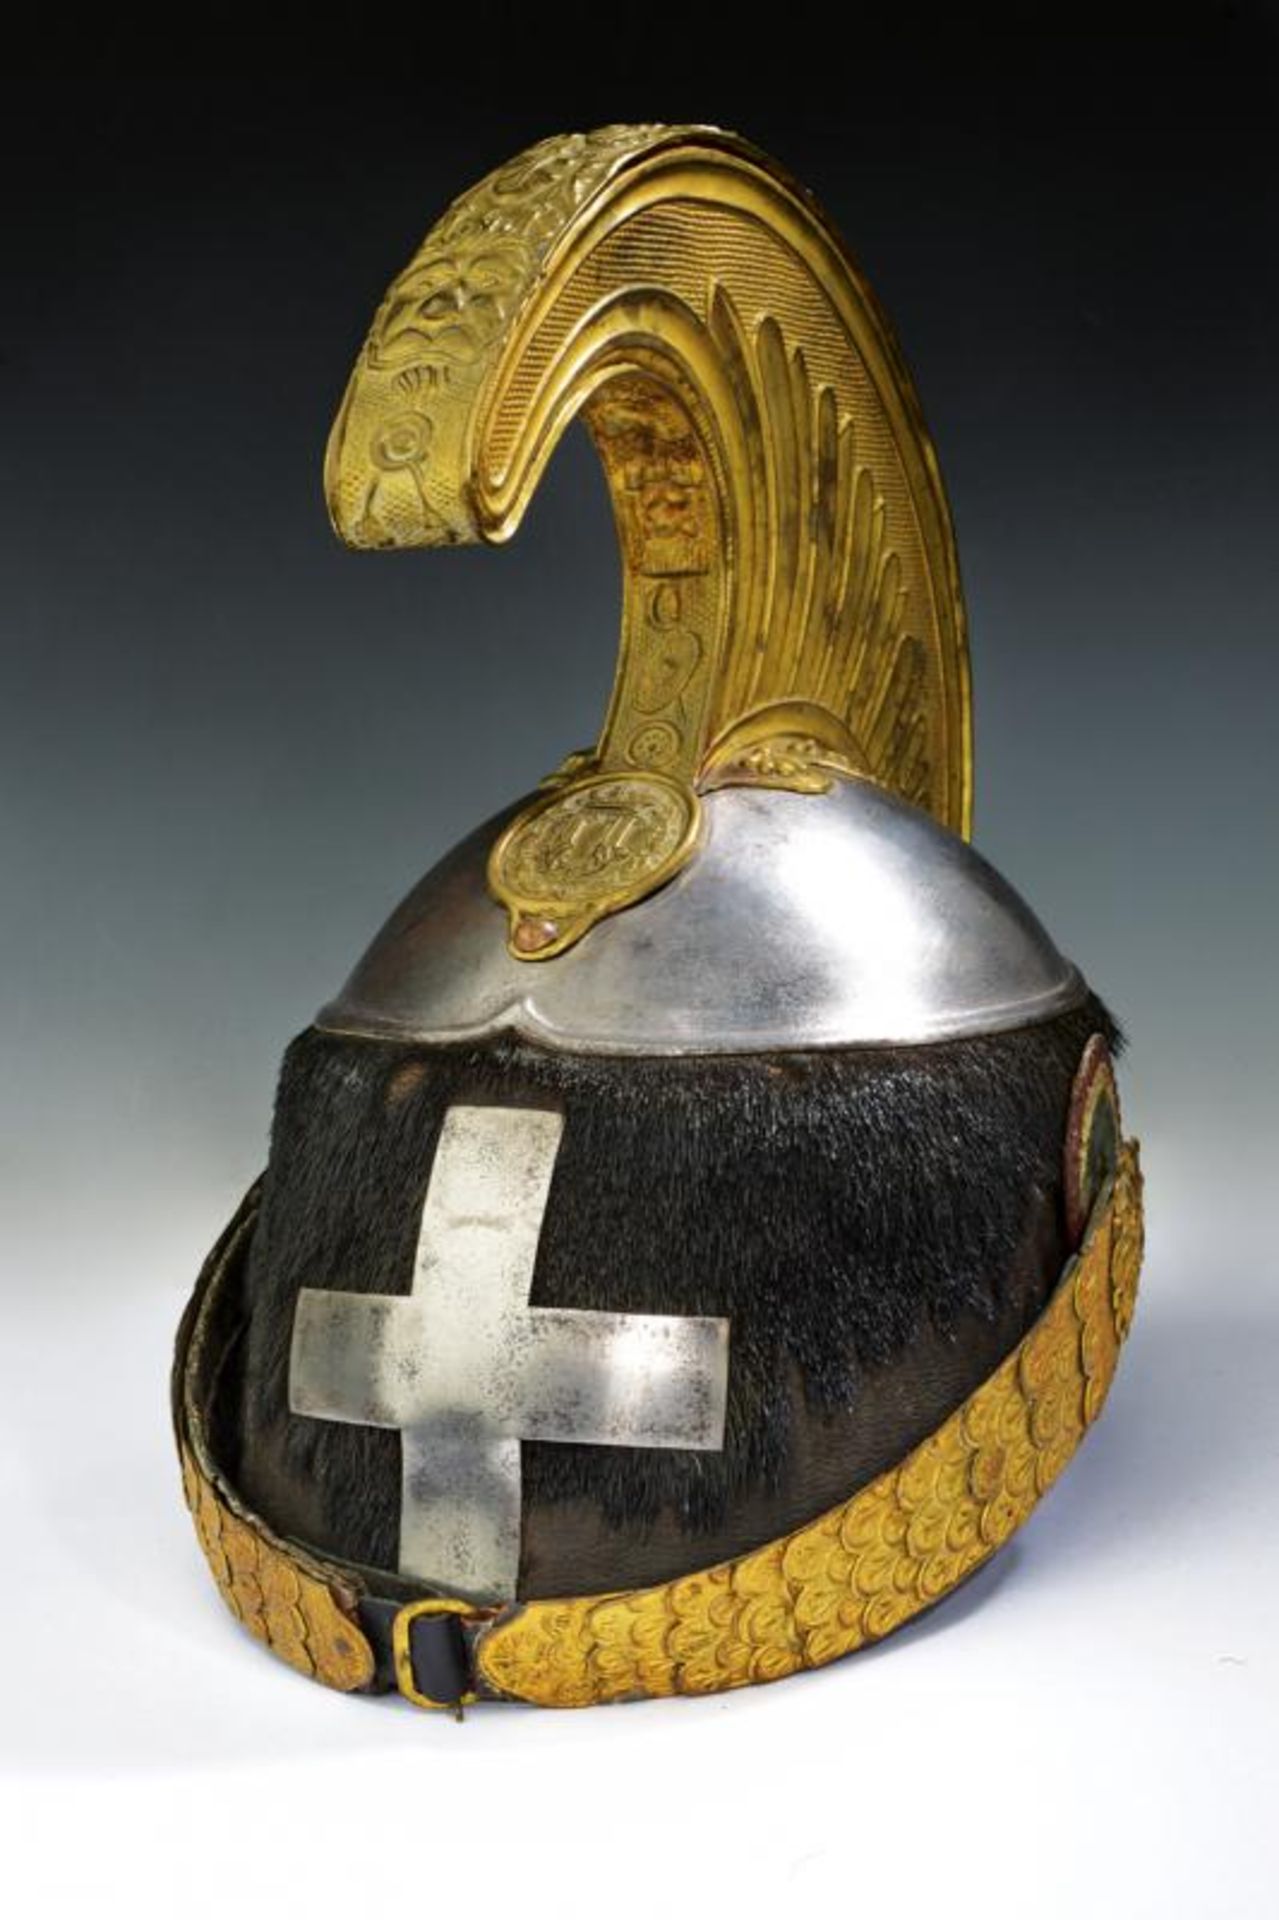 A cavalry trooper's helmet, epoch king Umberto I of Italy